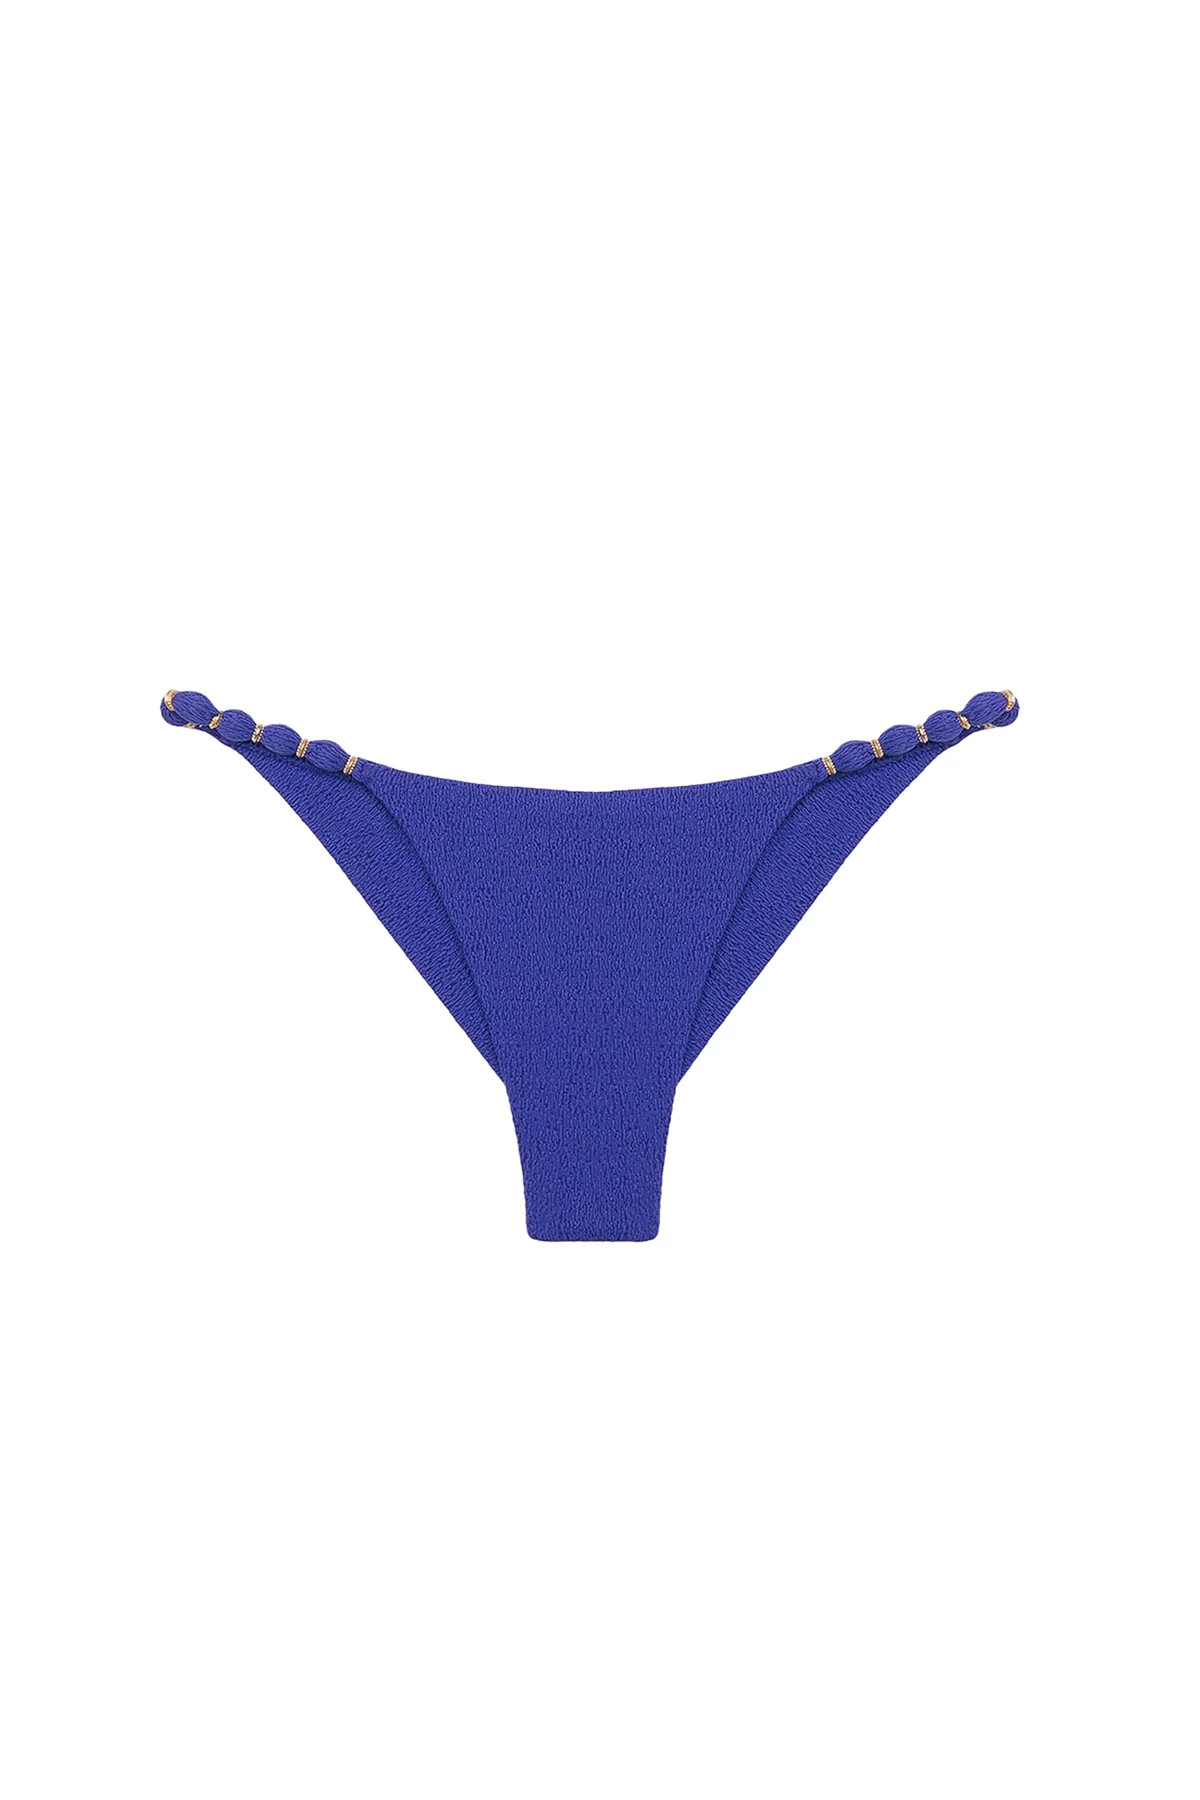 BLUE OCEAN Beads Tab Side Brazilian Bikini Bottom image number 3